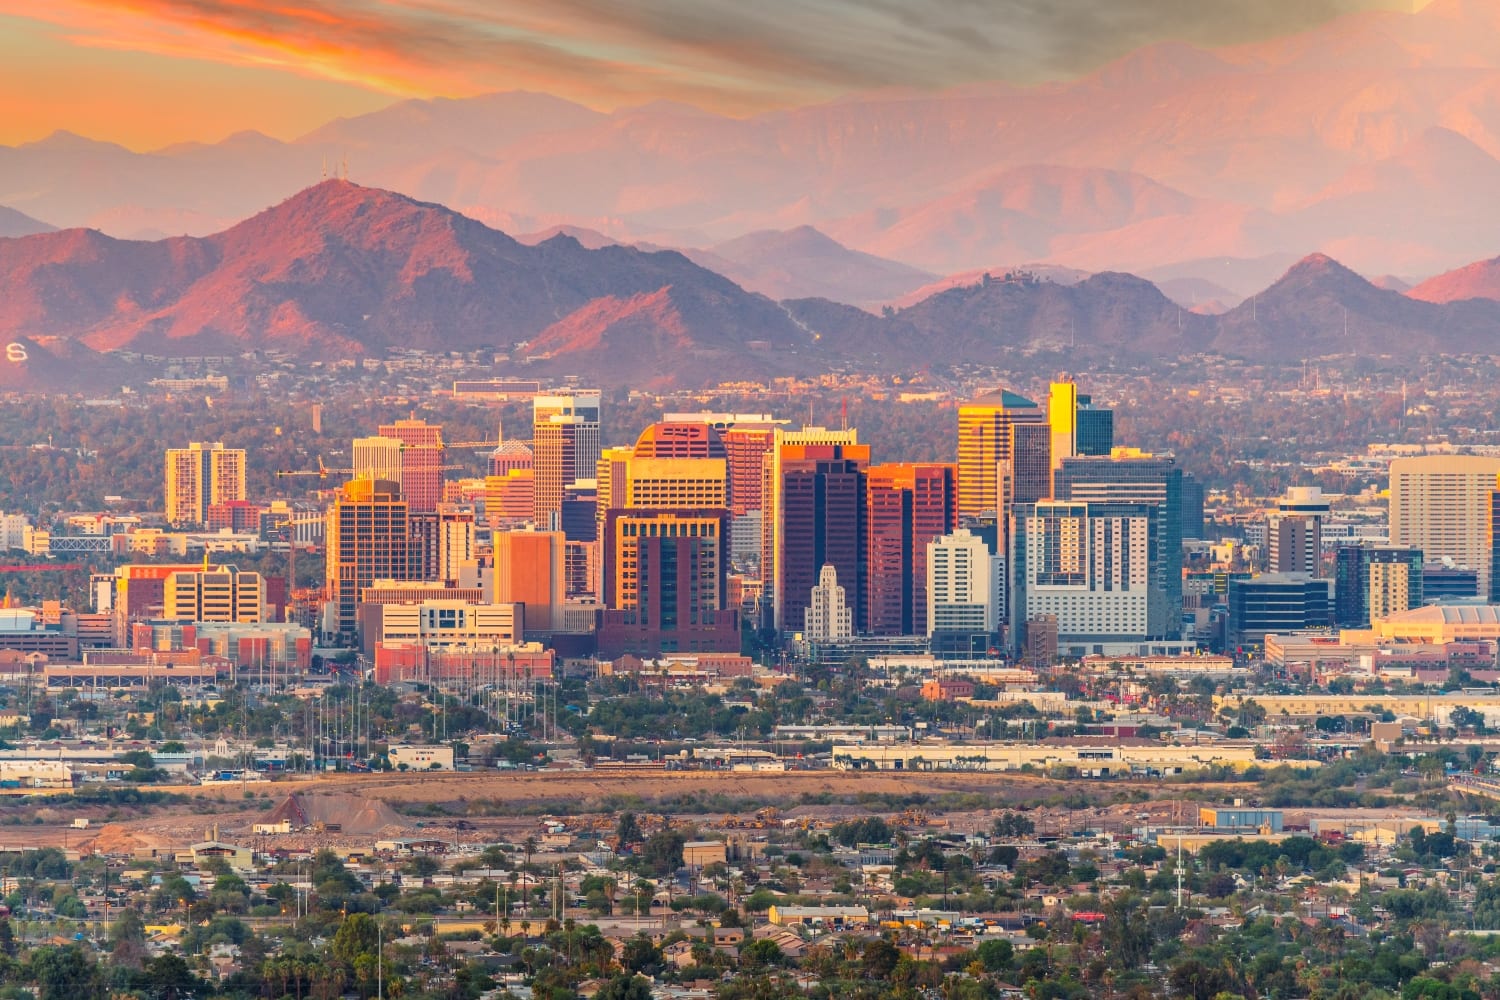 Mountains and city skyline of Phoenix, AZ